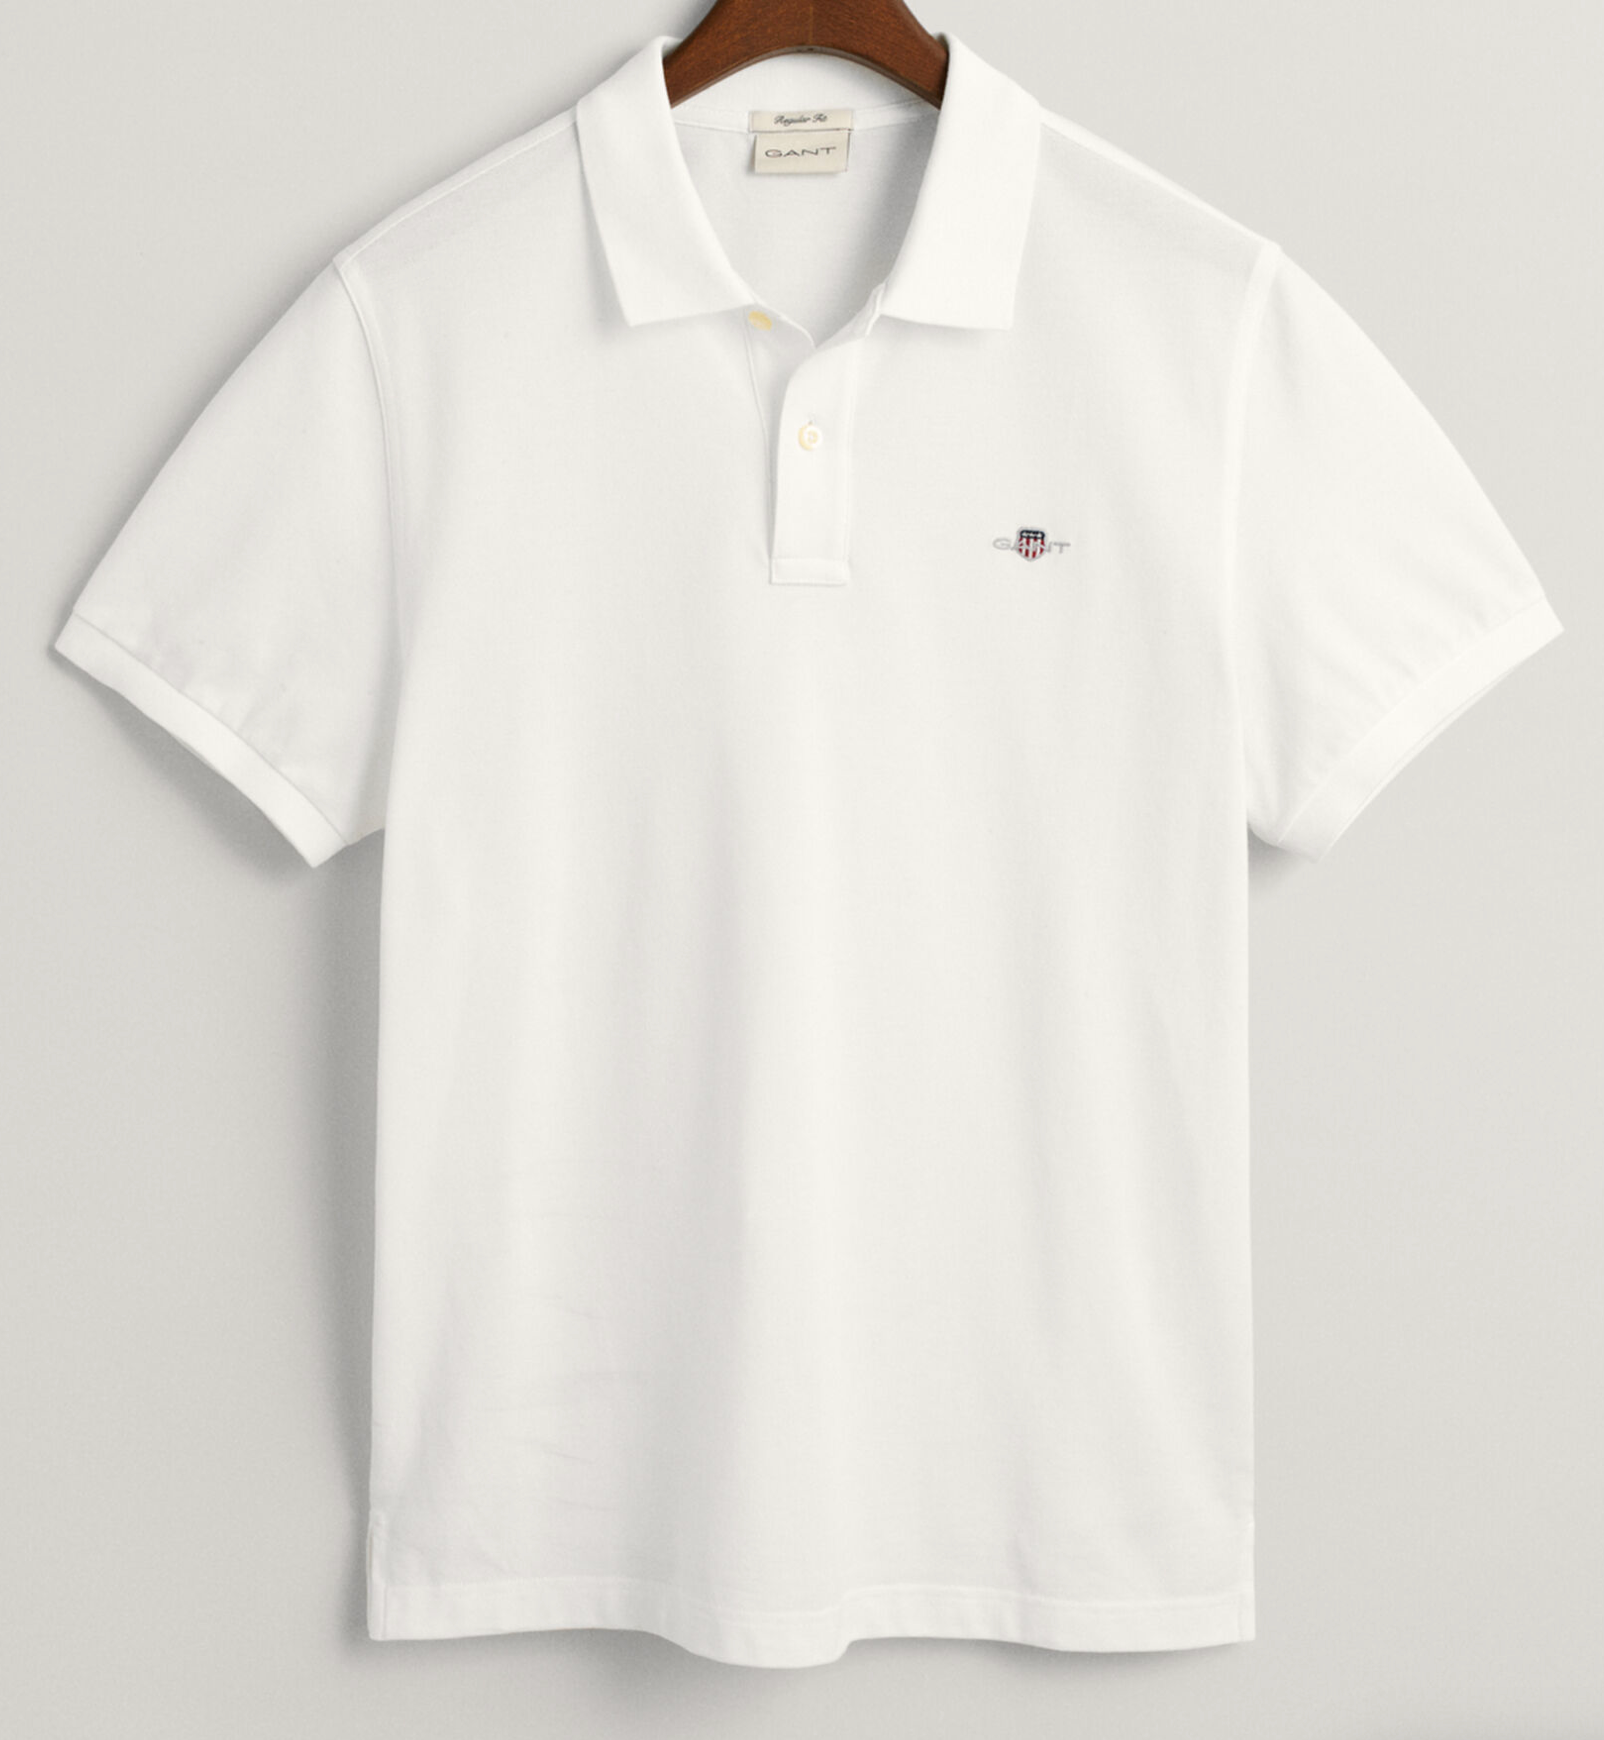 Gant "Classic Original" Polo Shirt White